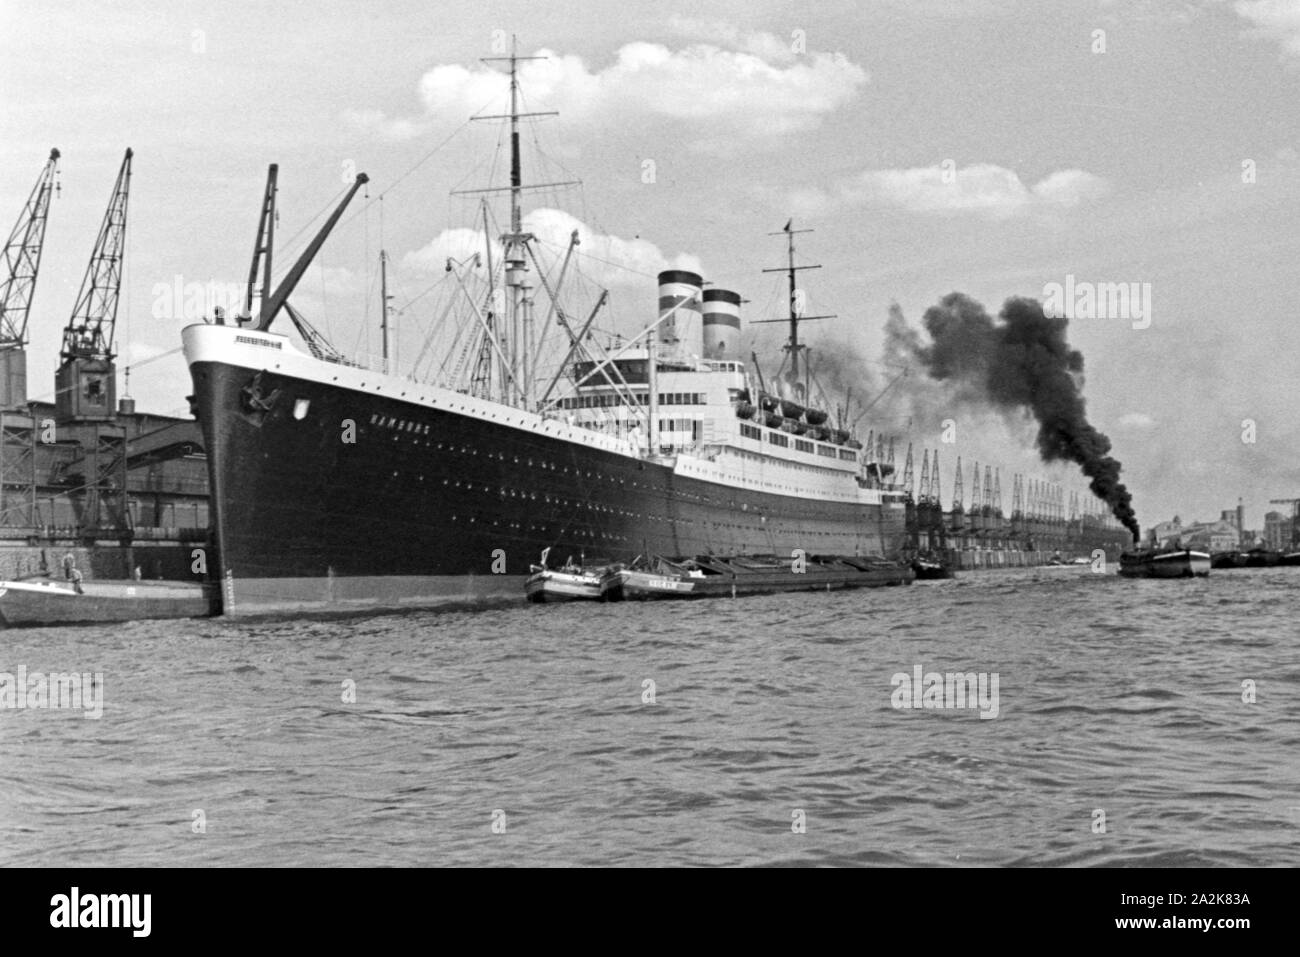 Das 'Passagierschiff im Hafen von' Hambourg Hambourg, 1930er Jahre. Bateau à vapeur passagers 'Hamburg' au port de Hambourg, 1930. Banque D'Images